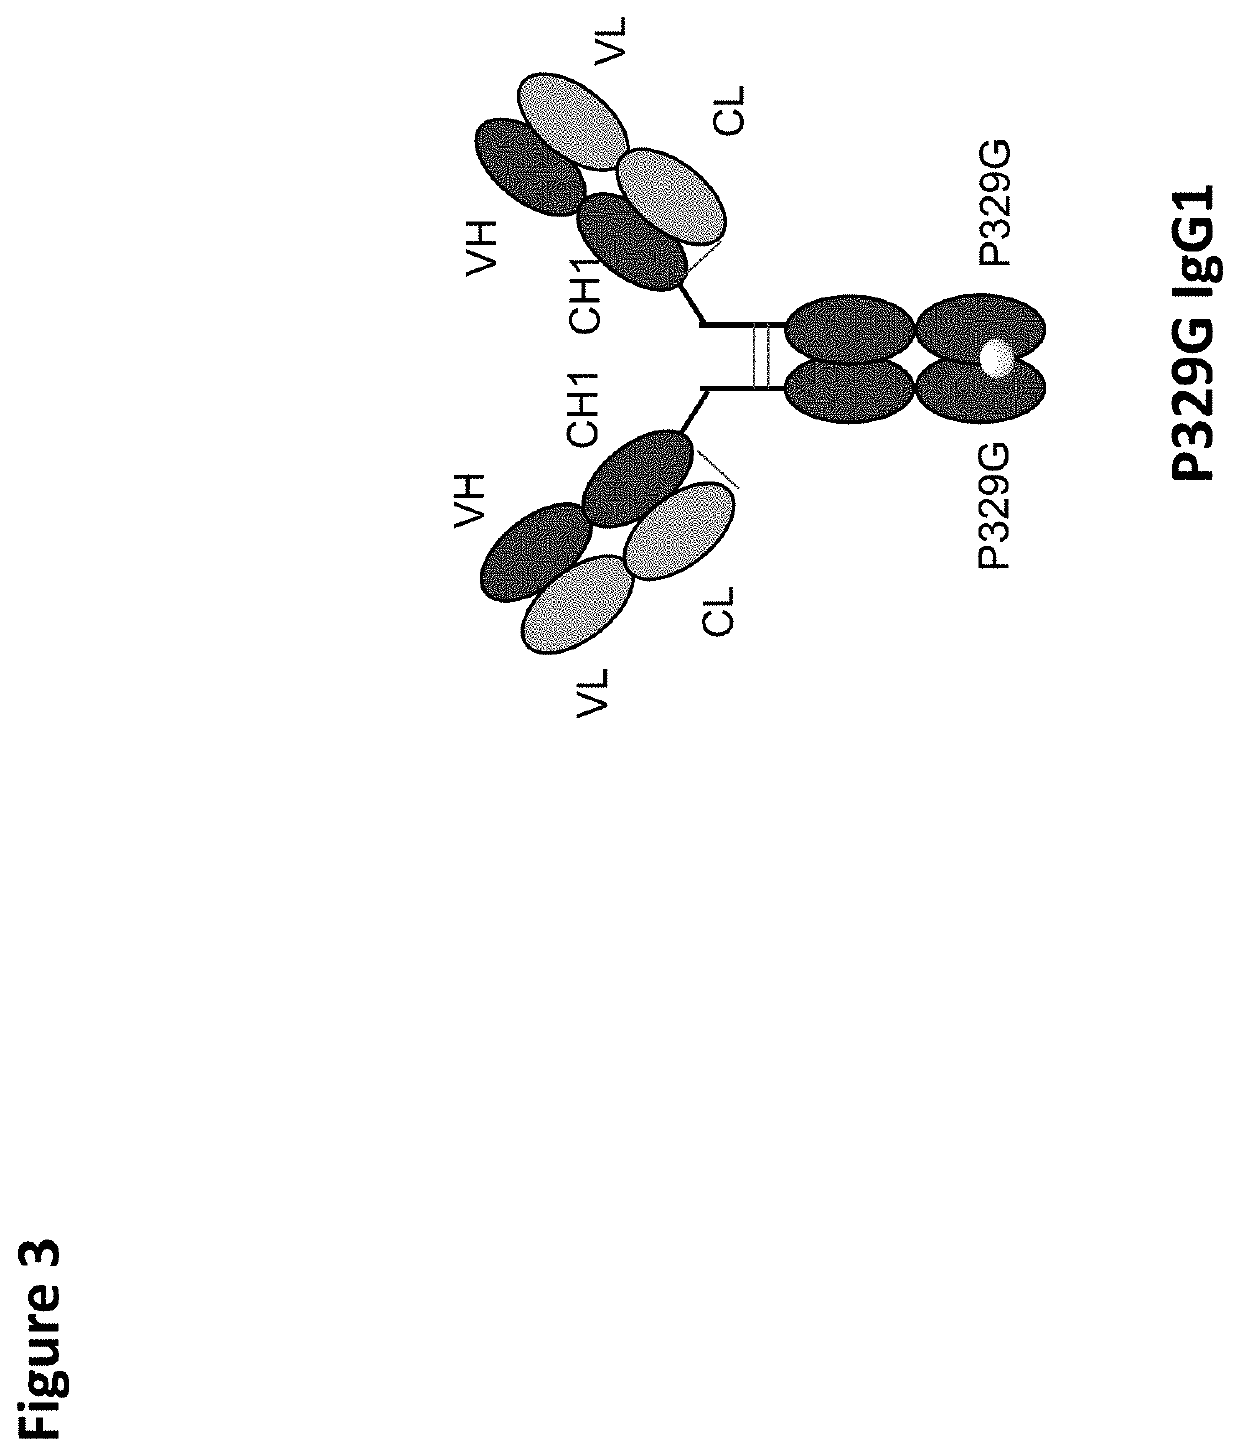 Universal reporter cell assay for specificity test of novel antigen binding moieties